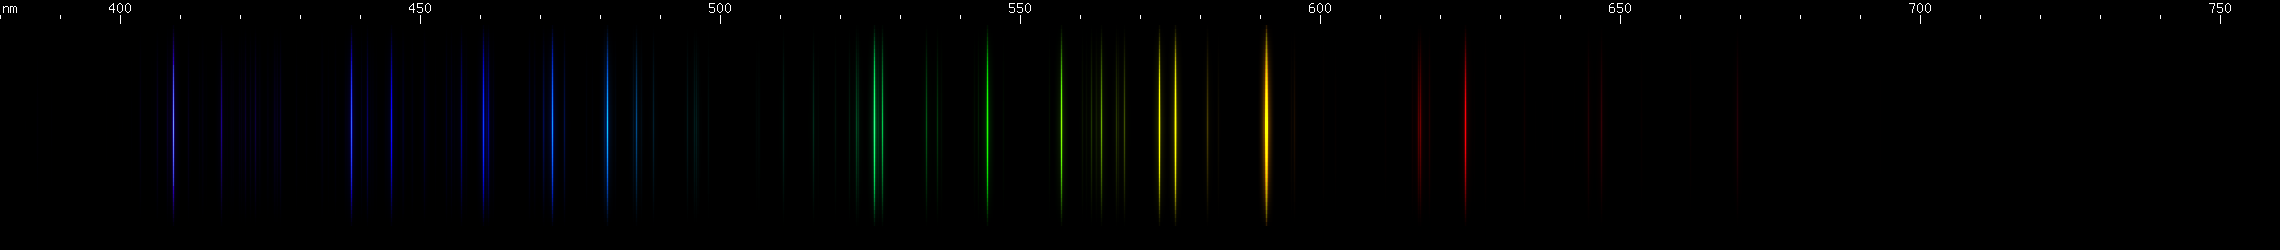 Spectral Lines of Actinium